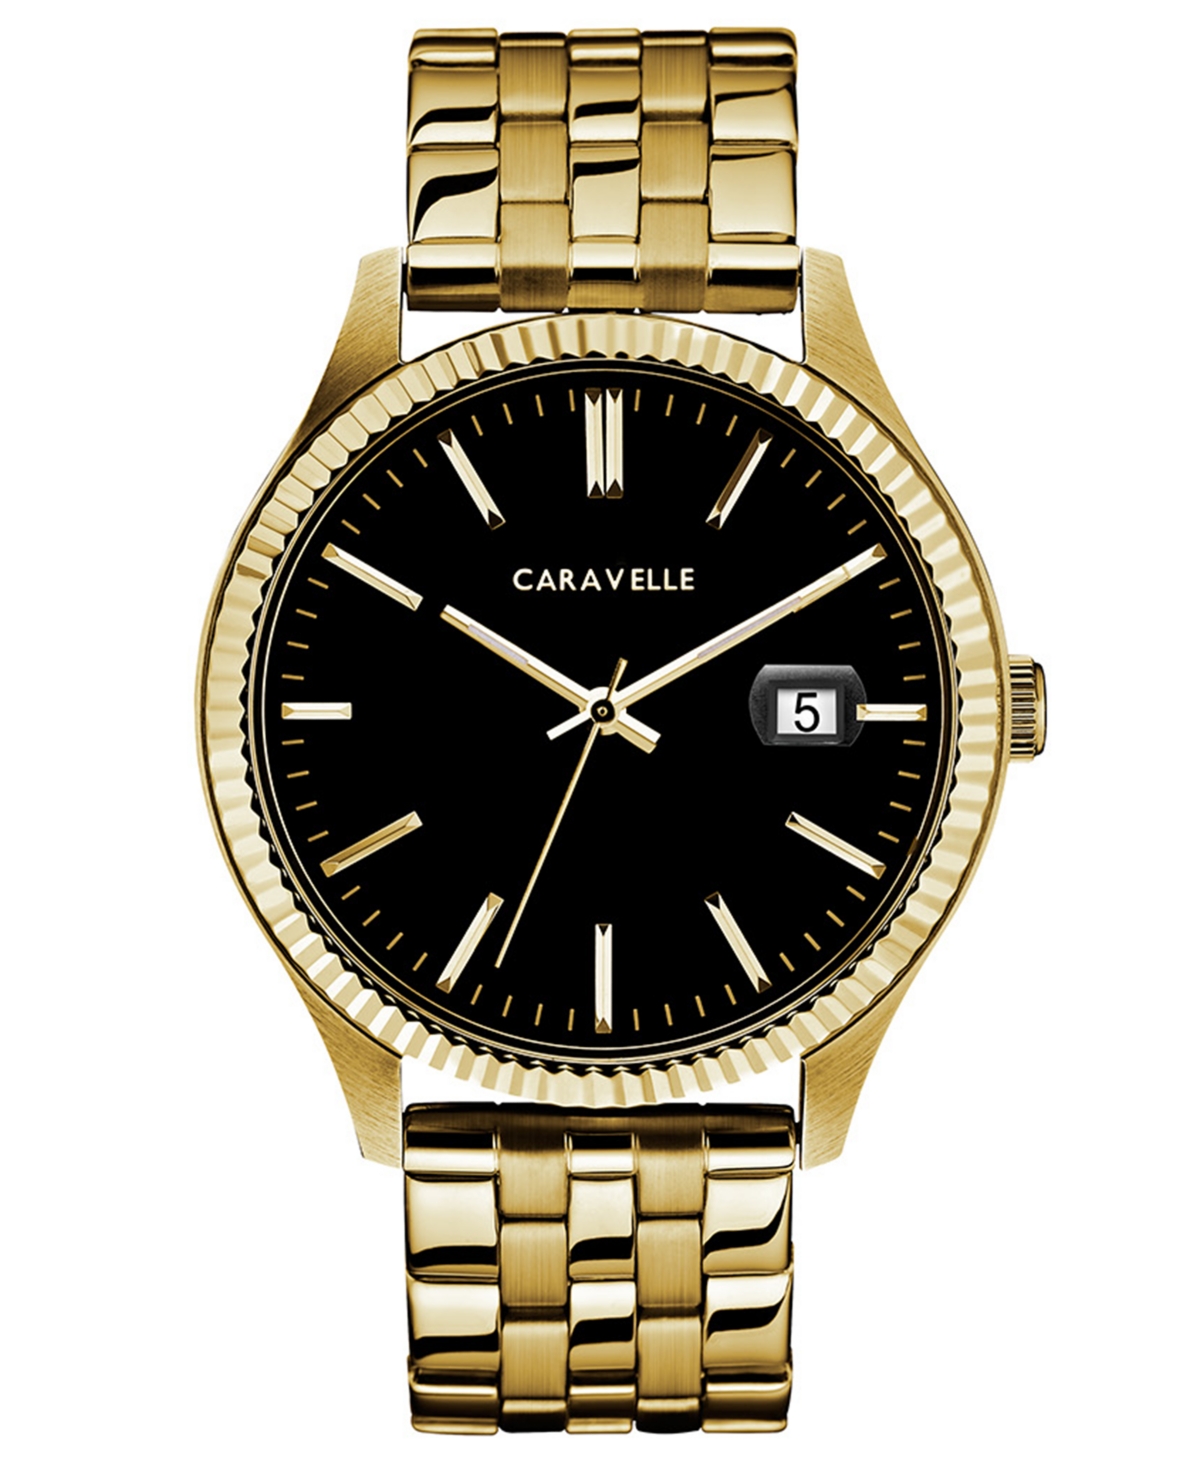 Designed by Bulova Men's Gold-Tone Stainless Steel Bracelet Watch 41mm